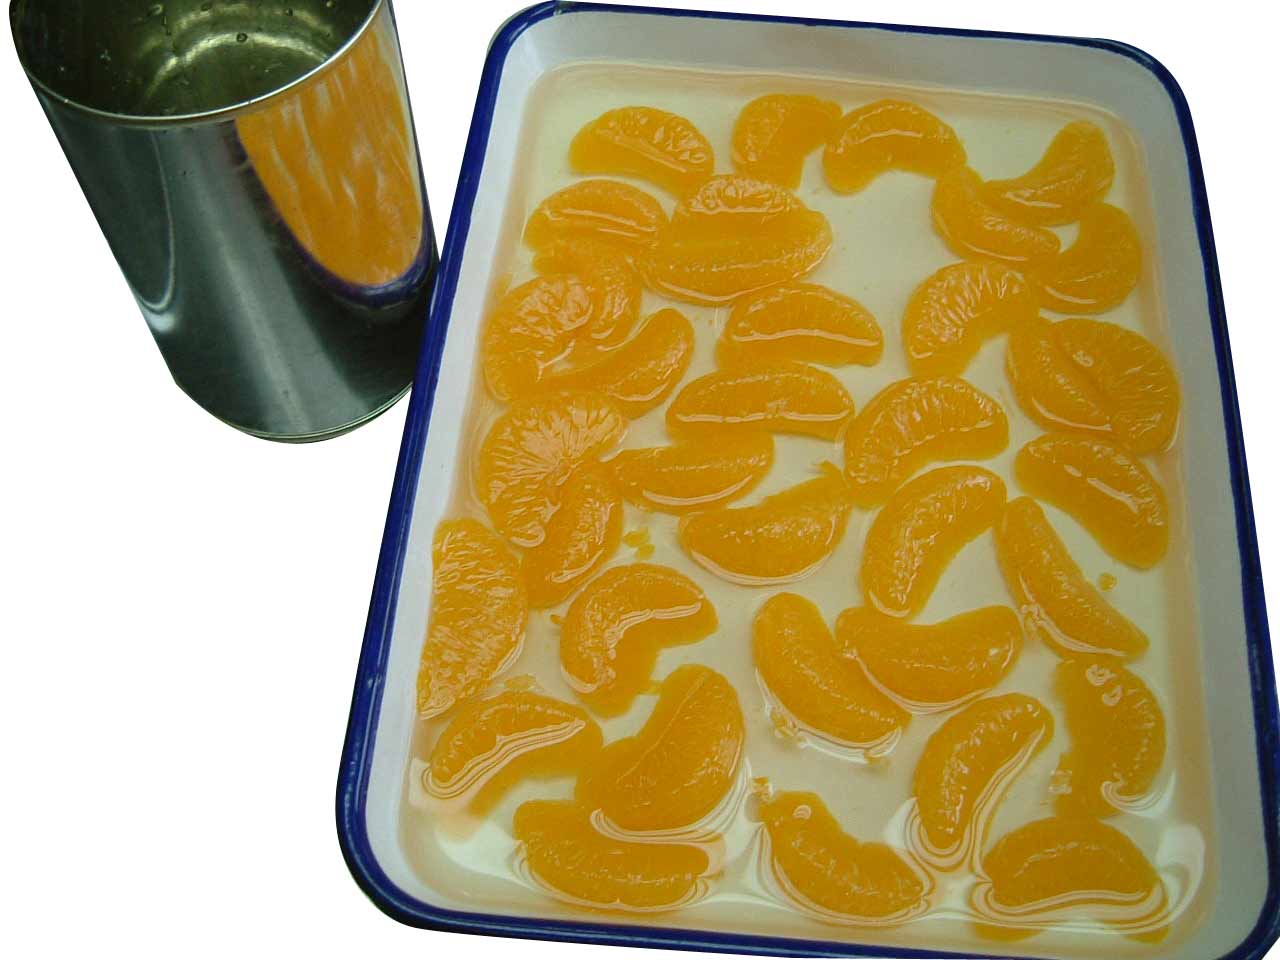  Mandarin Orange in Syrup